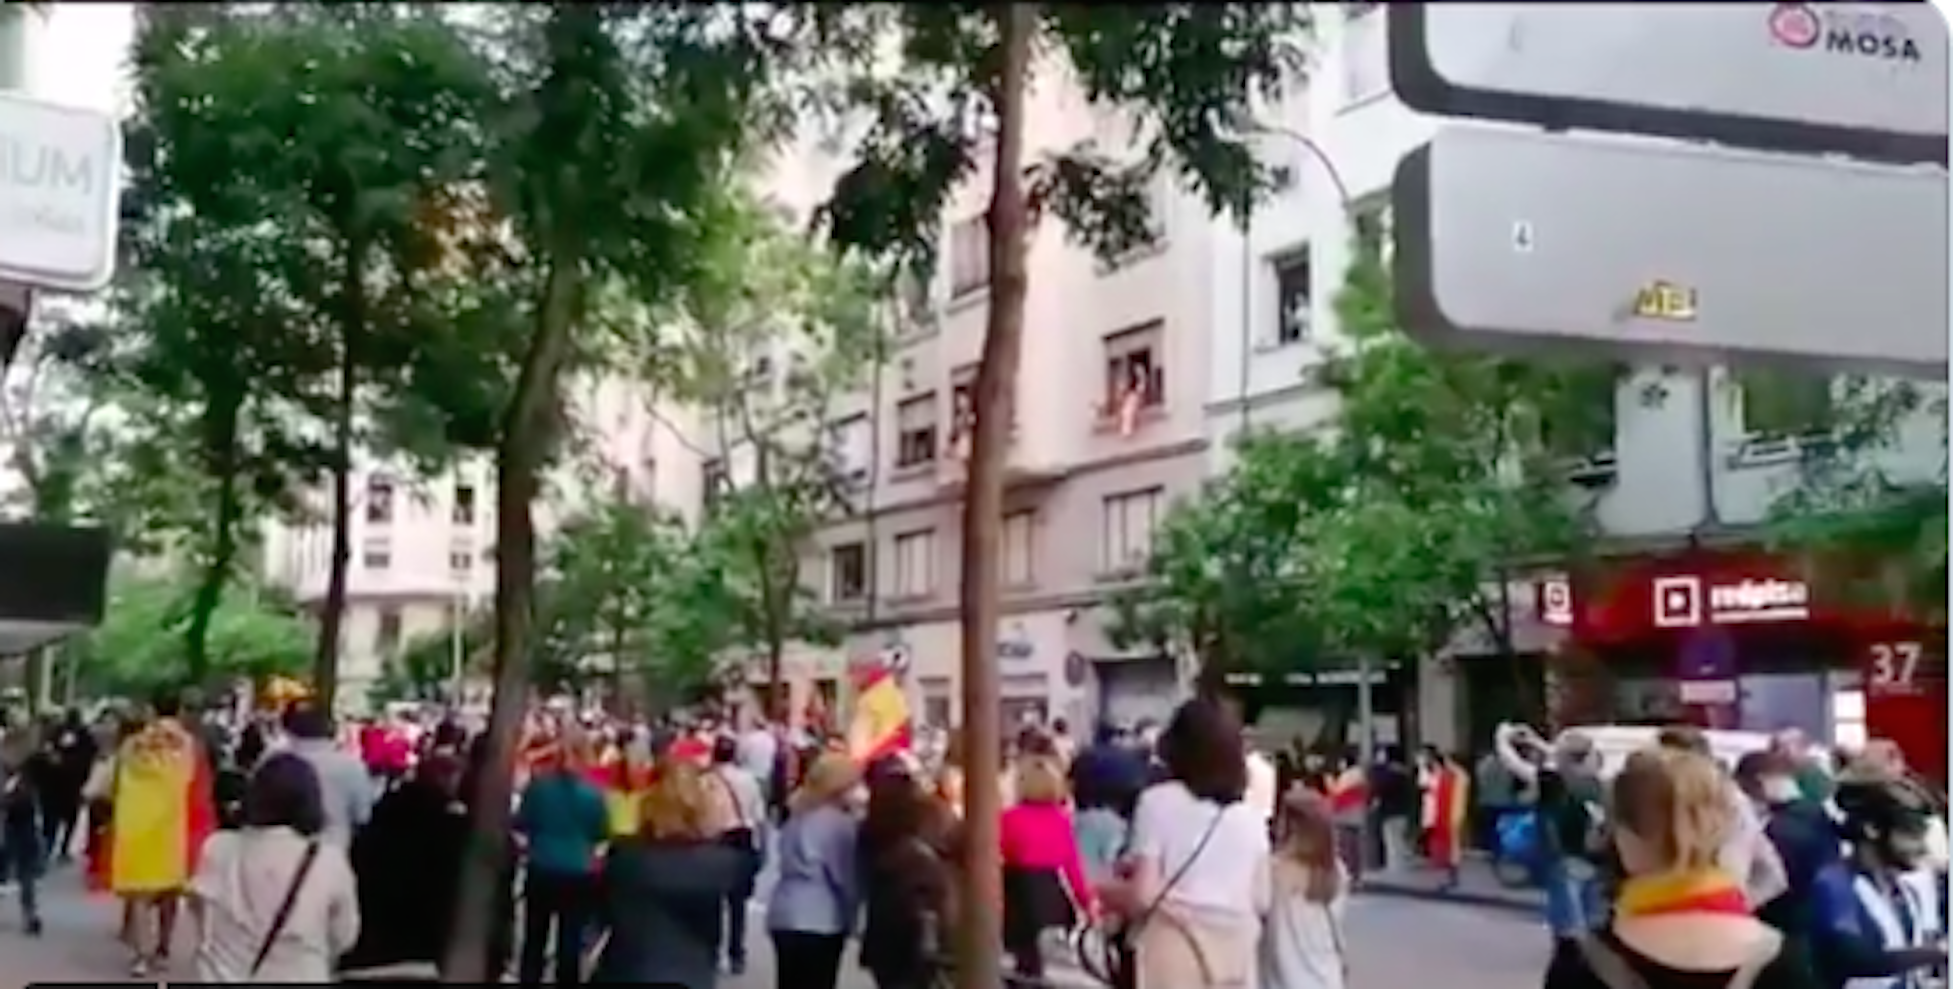 VIDEO | Les protestes ultres apugen el to i incorporen escarnis